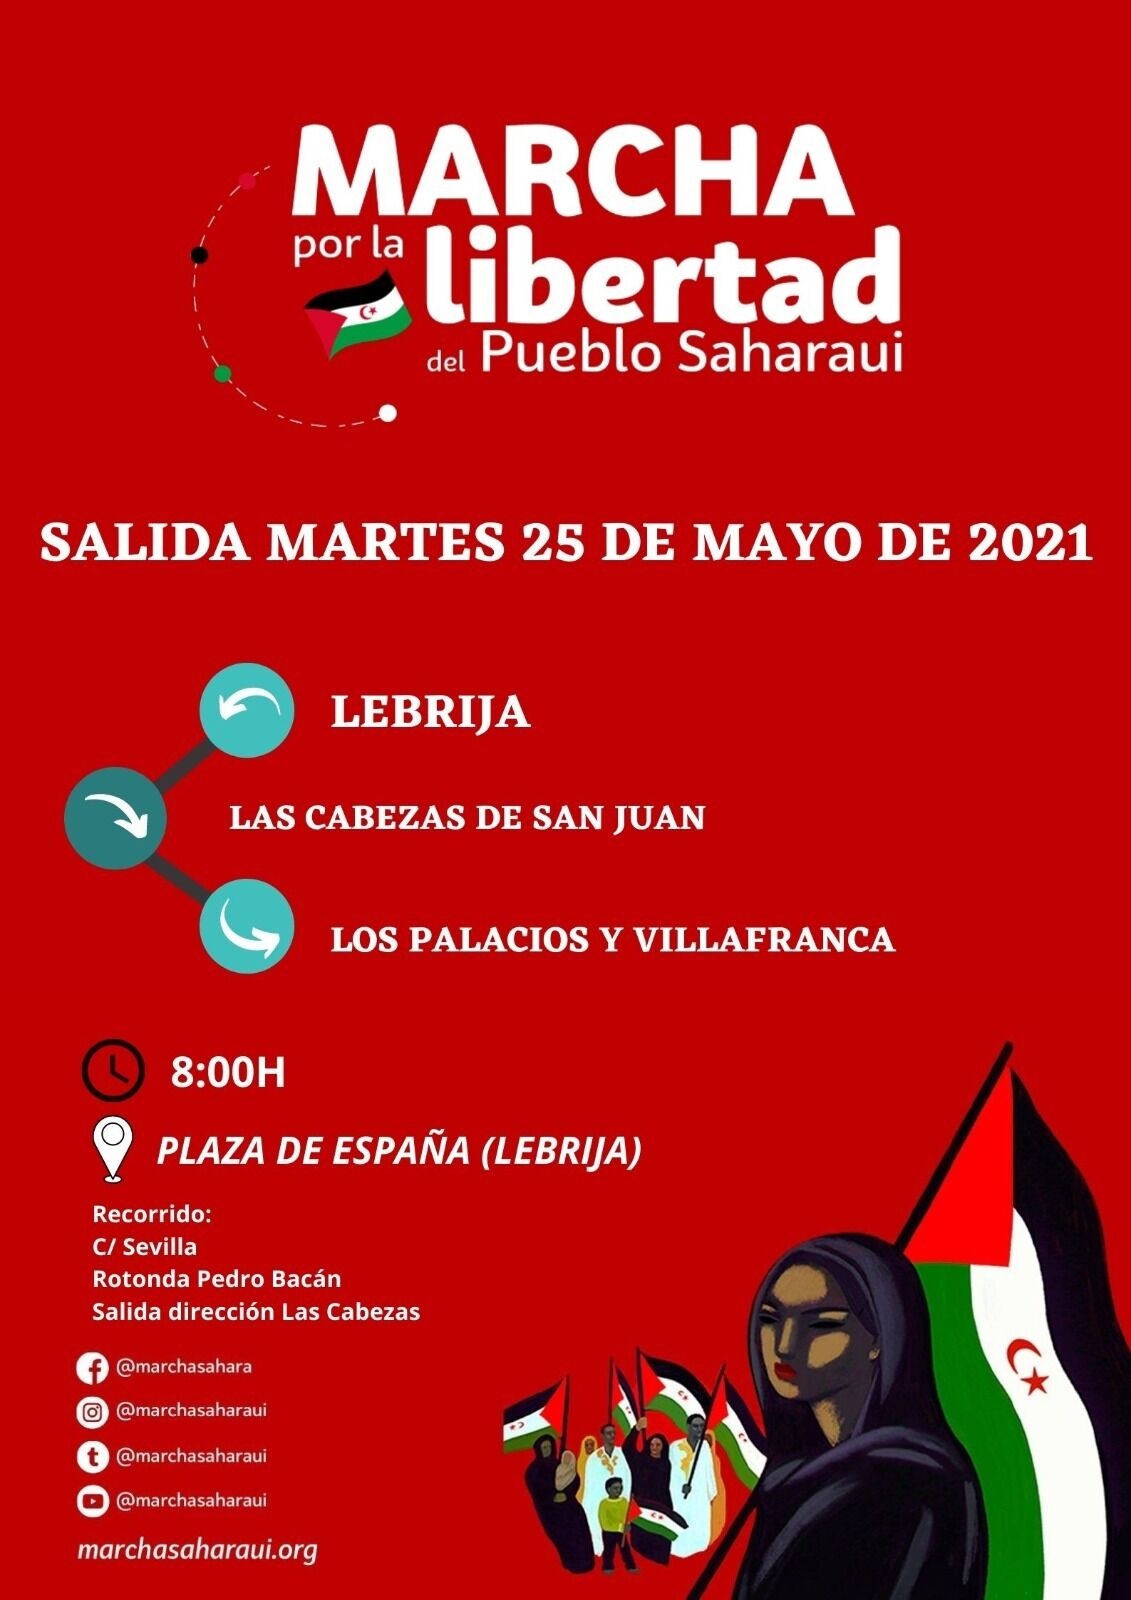 Marcha por la libertad pueblo saharaui - 25 mayo